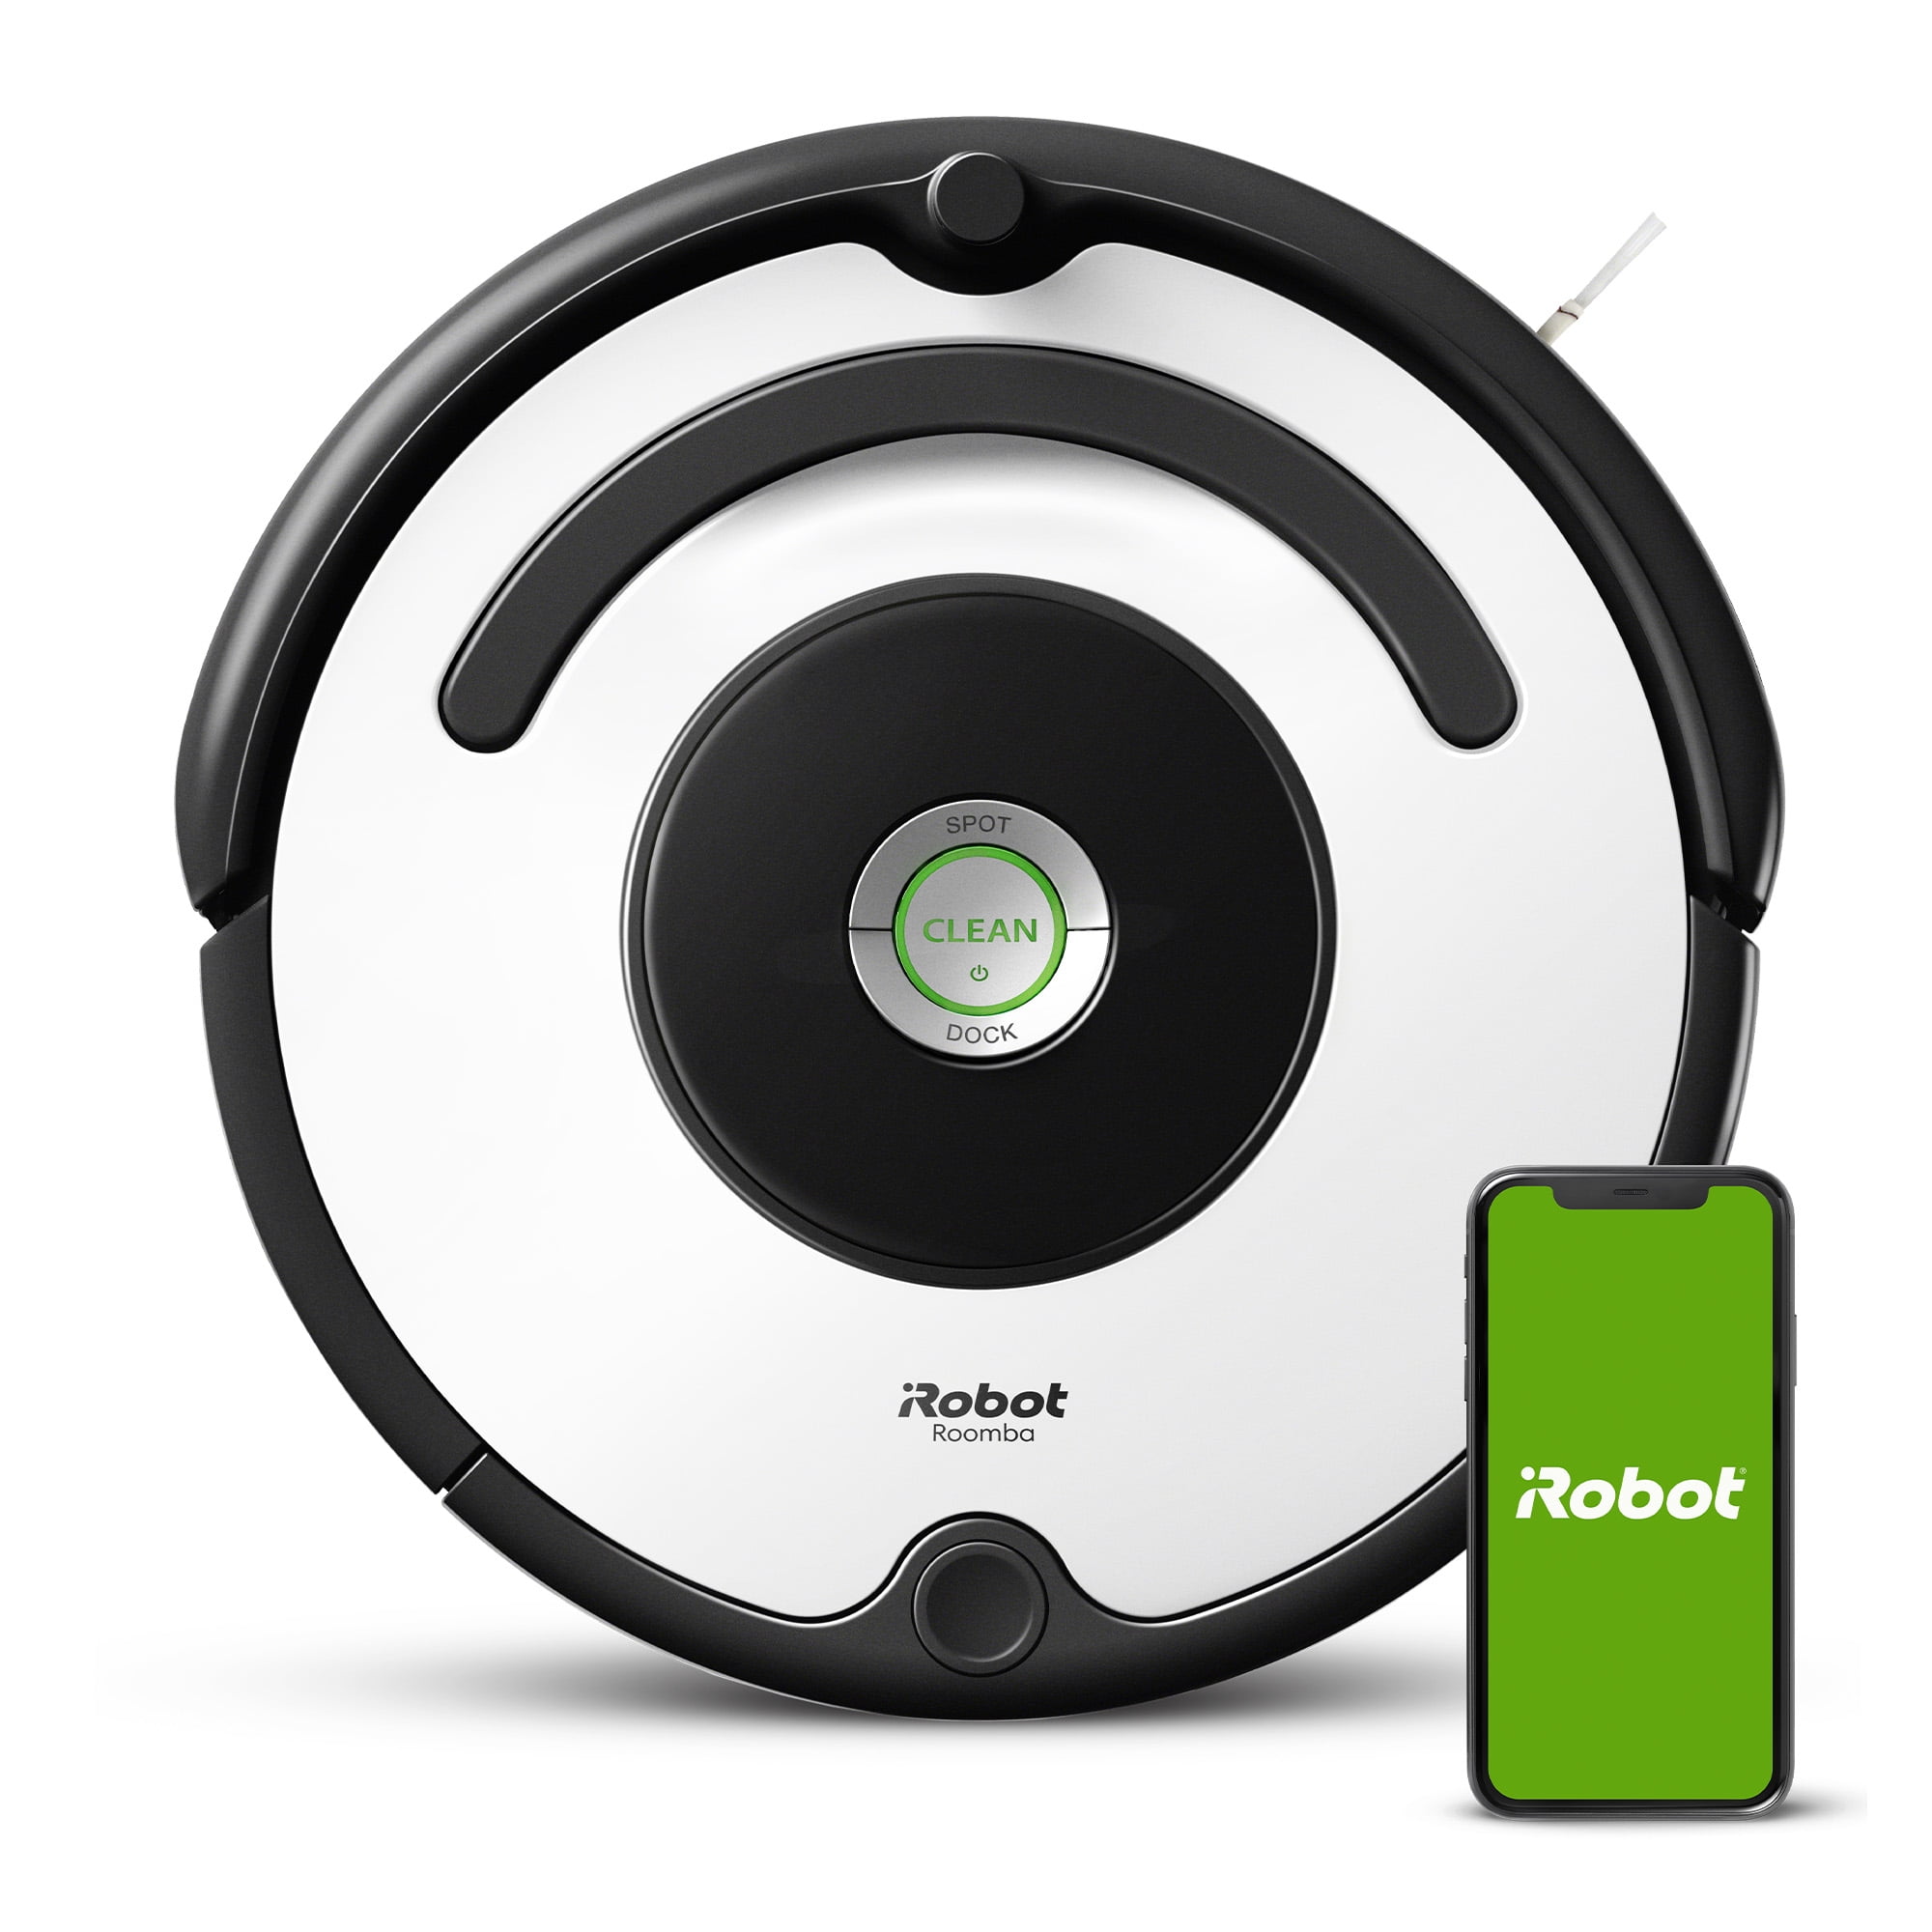 iRobot 670 Robot Vacuum-Wi-Fi Connectivity, Works with Google Home, Good for Pet Hair, Hard Floors, - Walmart.com